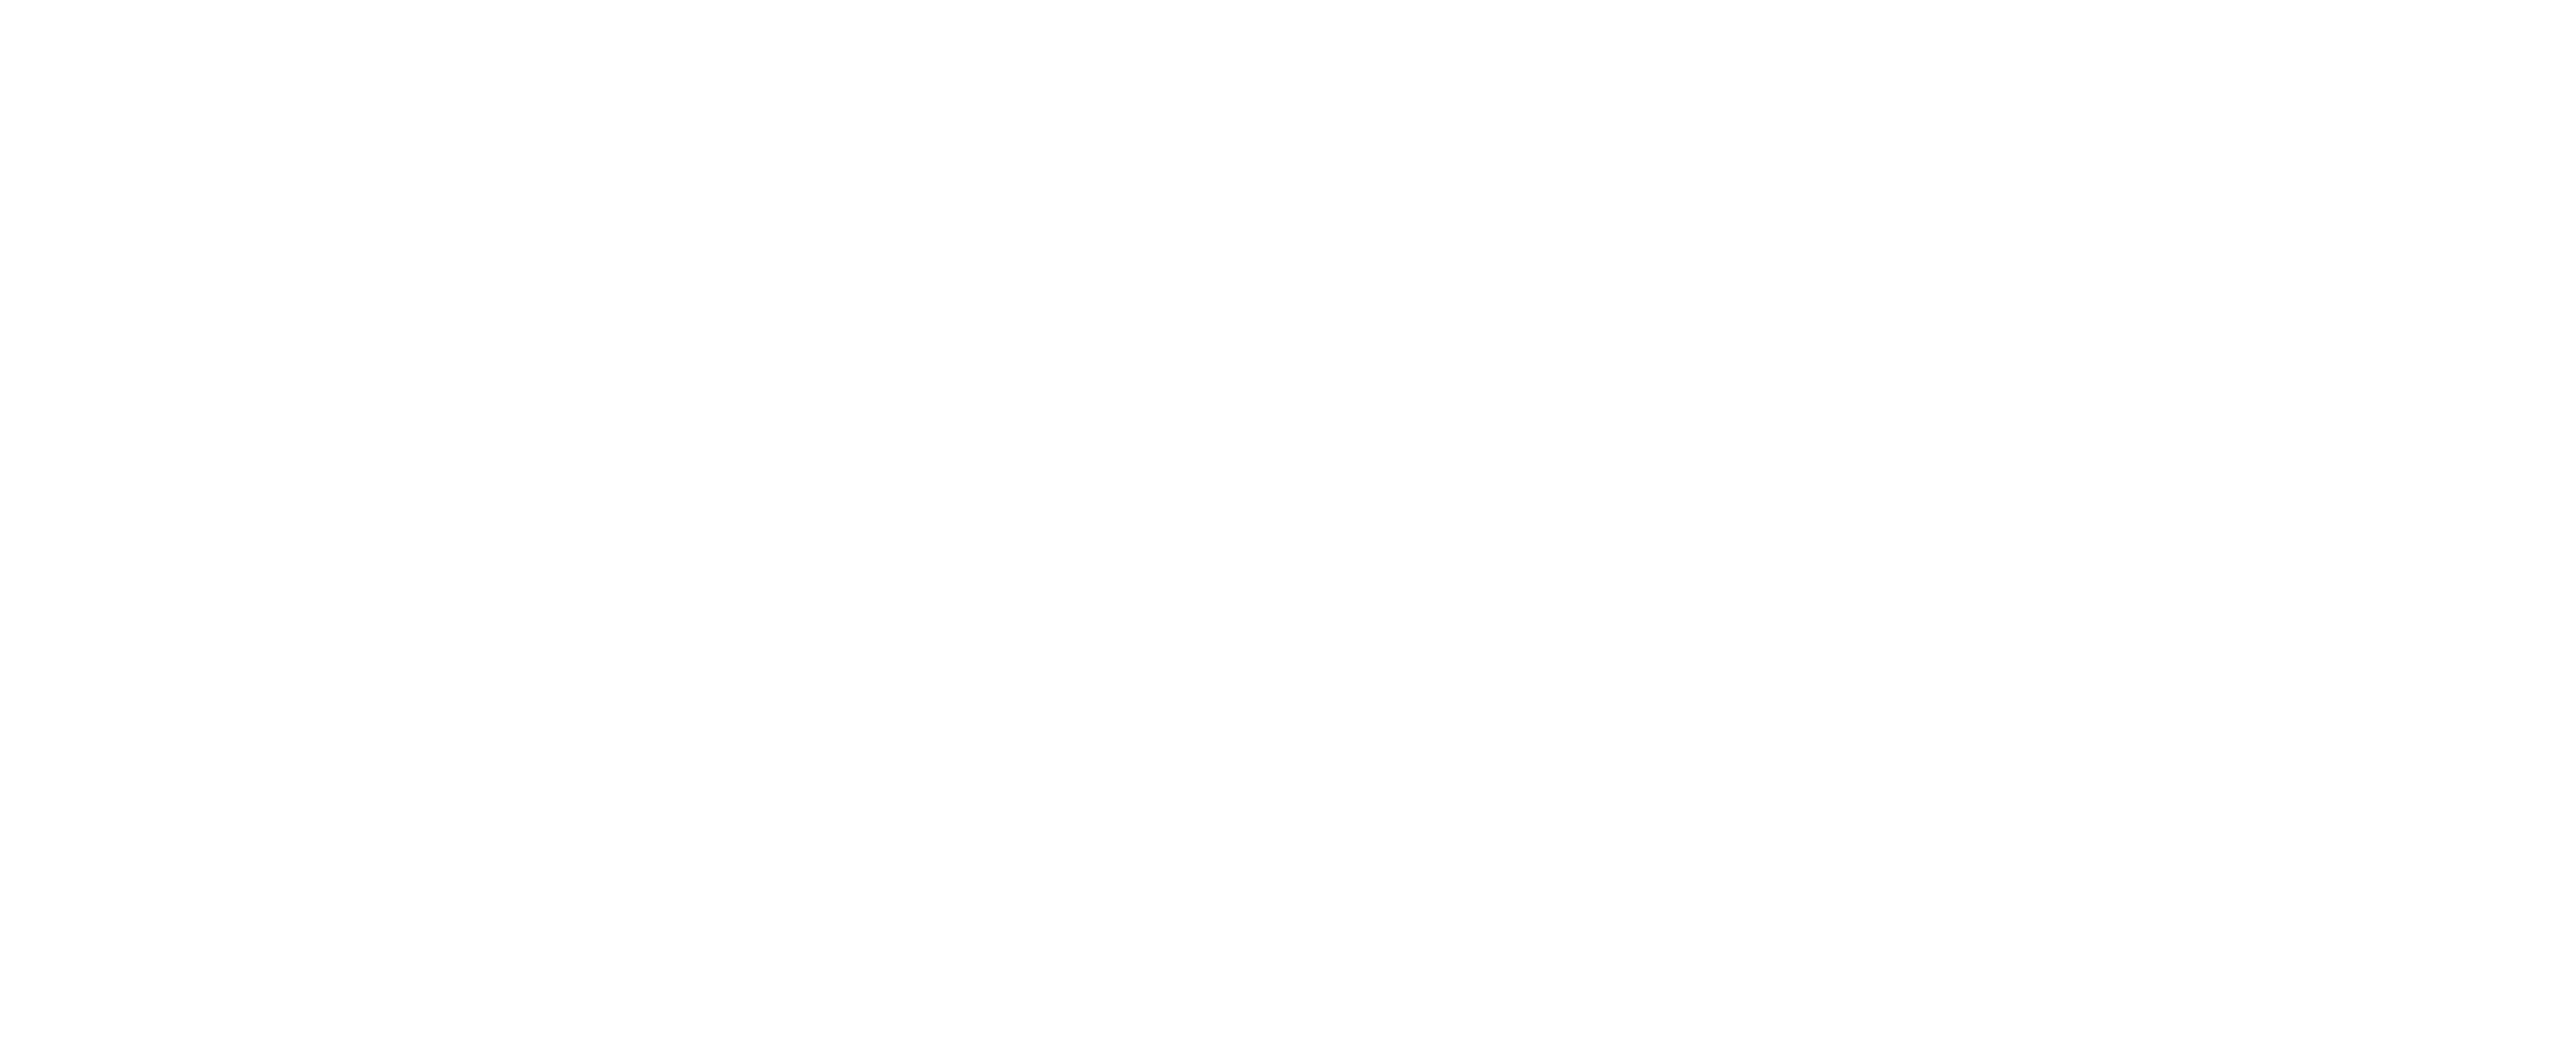 Muskoka Woods Logo